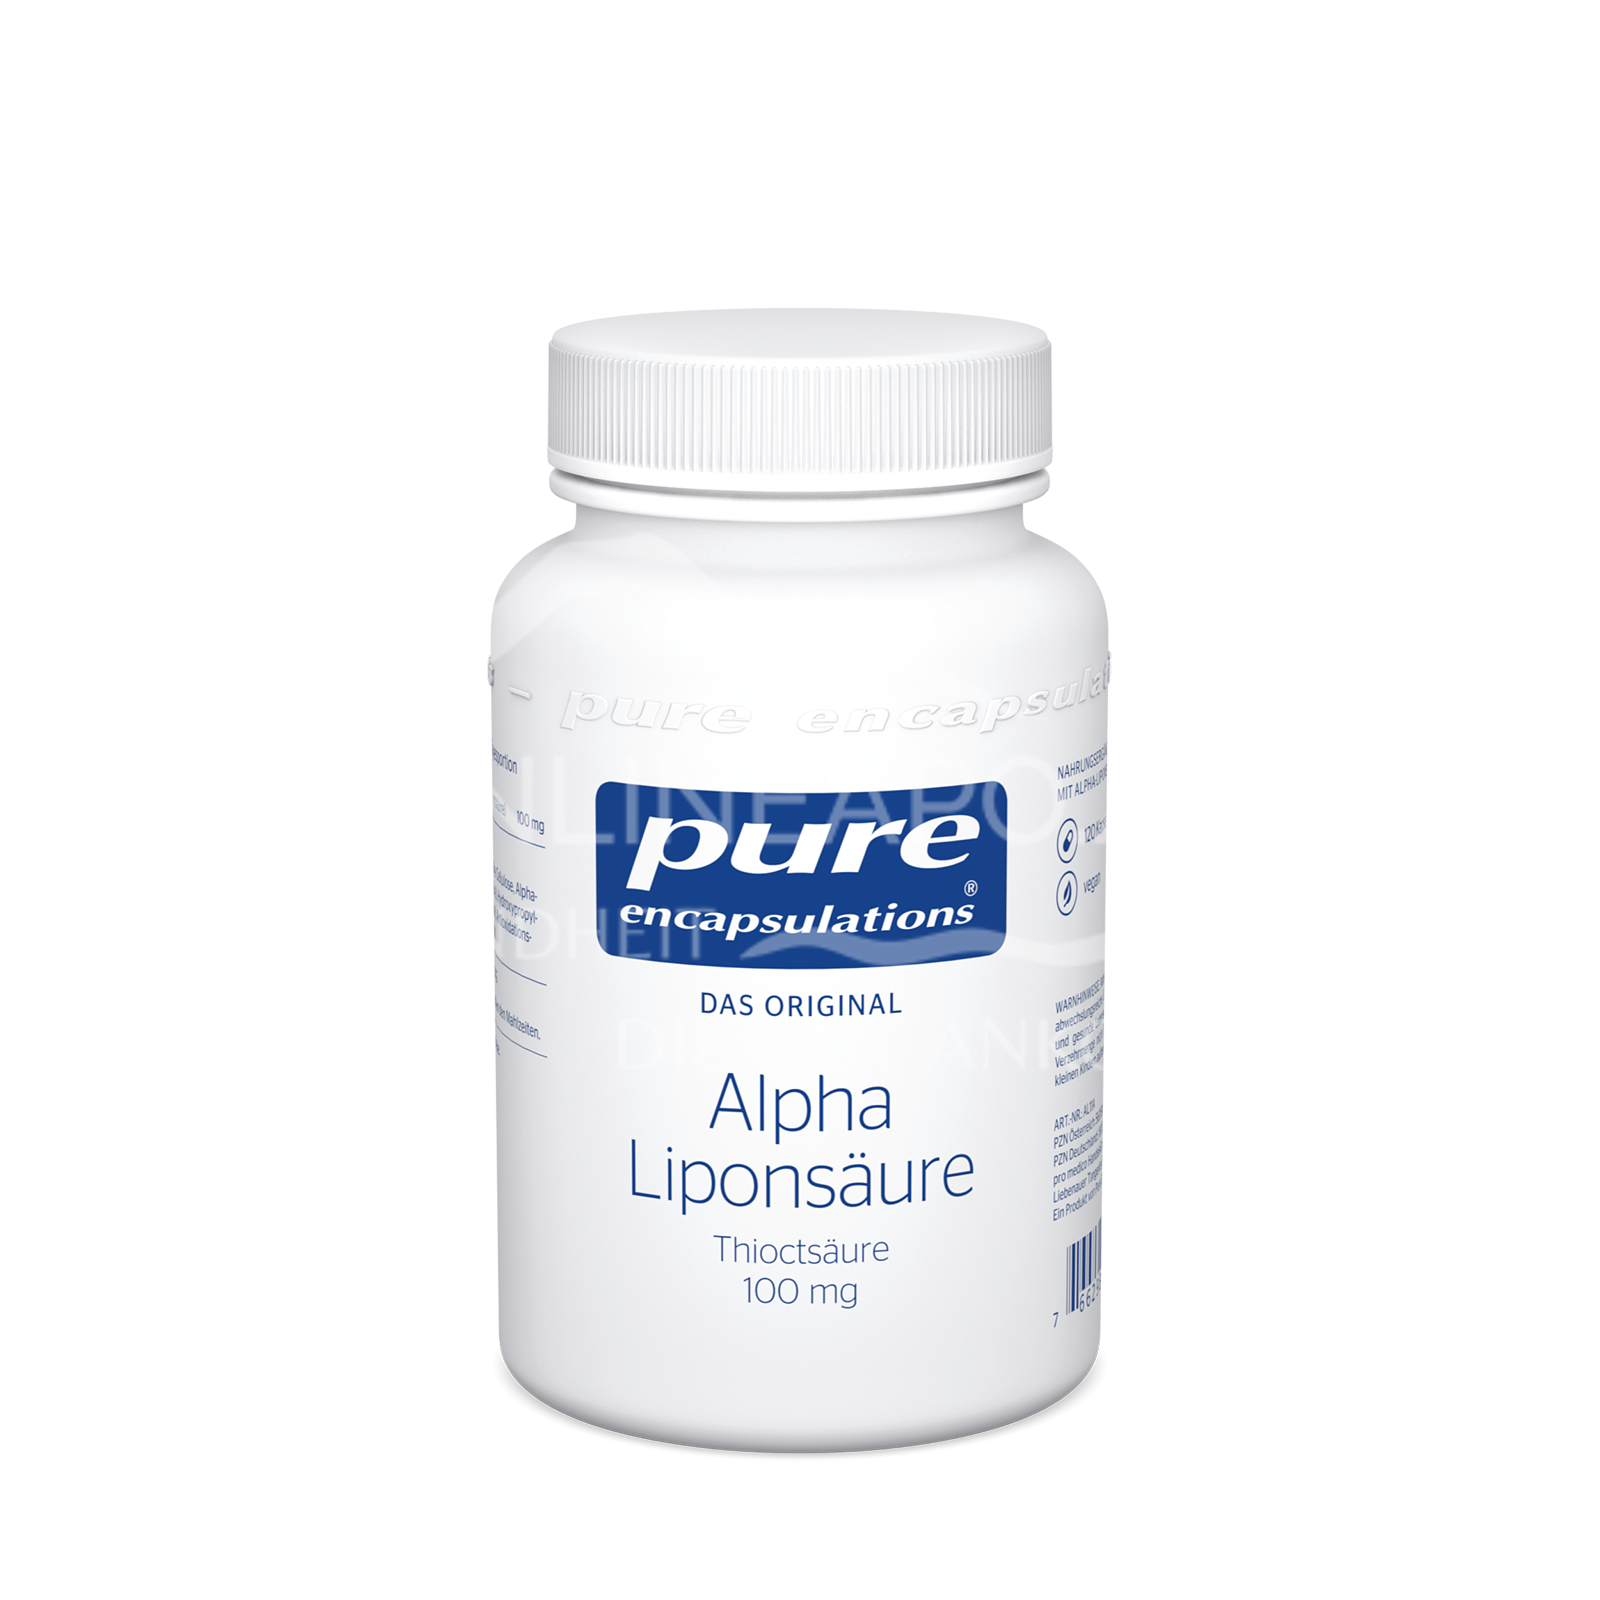 pure encapsulations® Alpha Liponsäure Thioctsäure 100 mg Kapseln